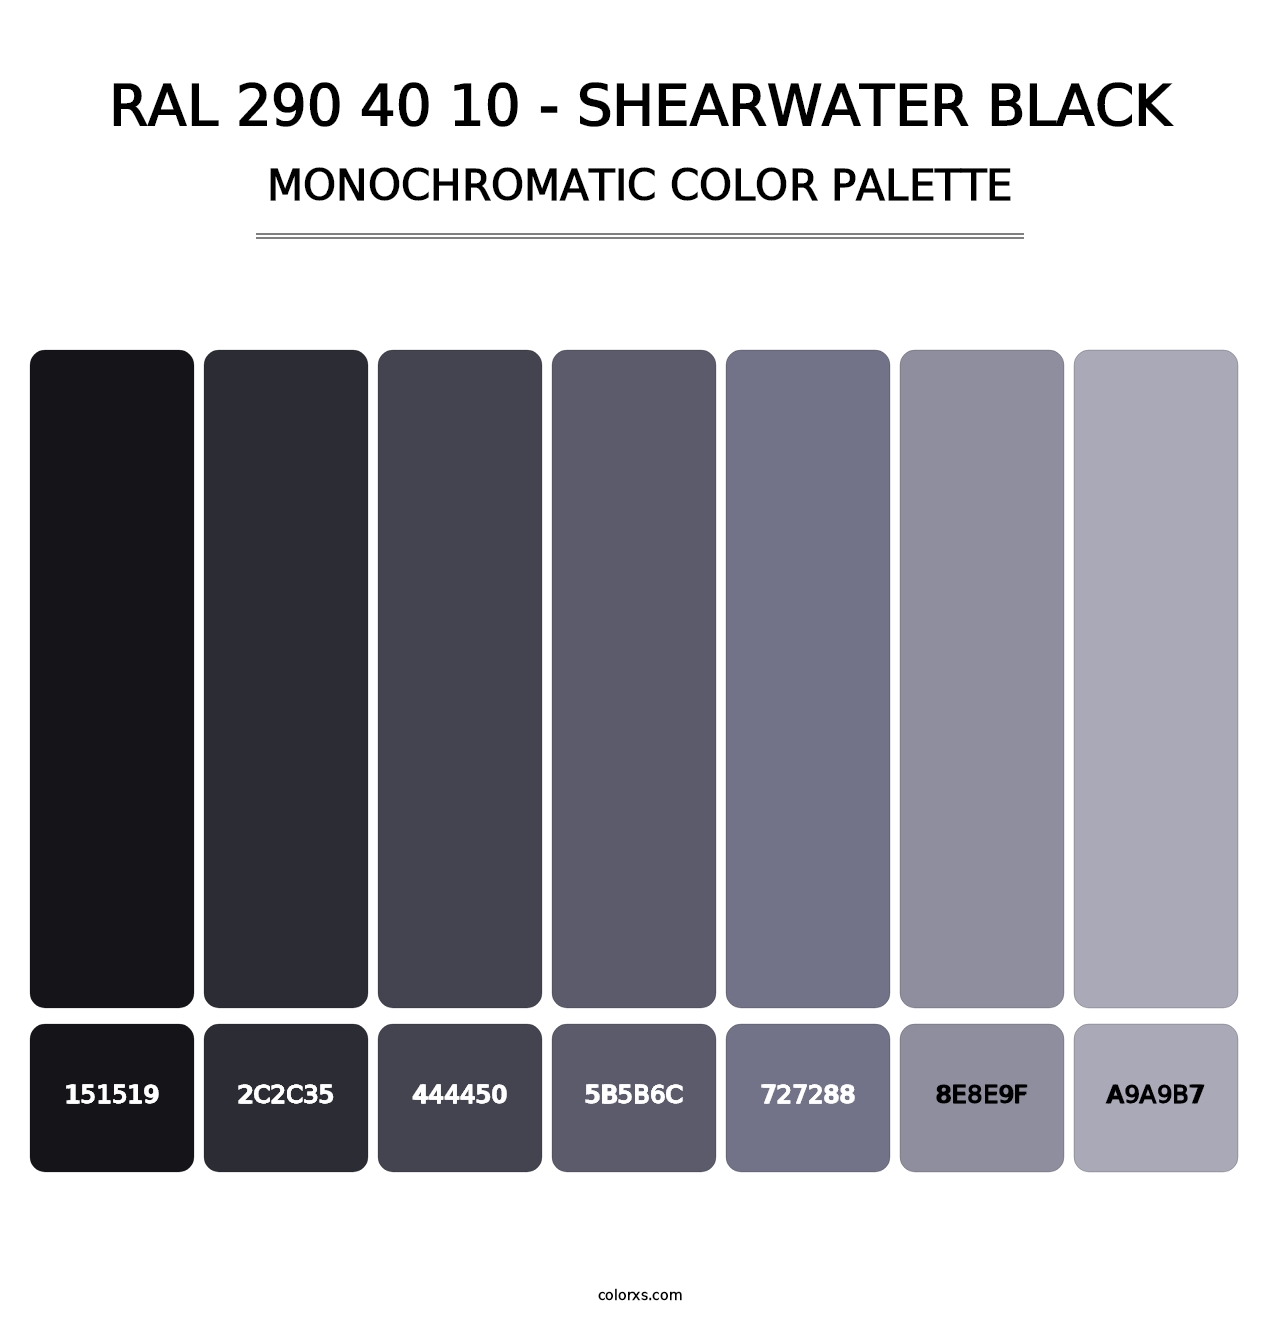 RAL 290 40 10 - Shearwater Black - Monochromatic Color Palette